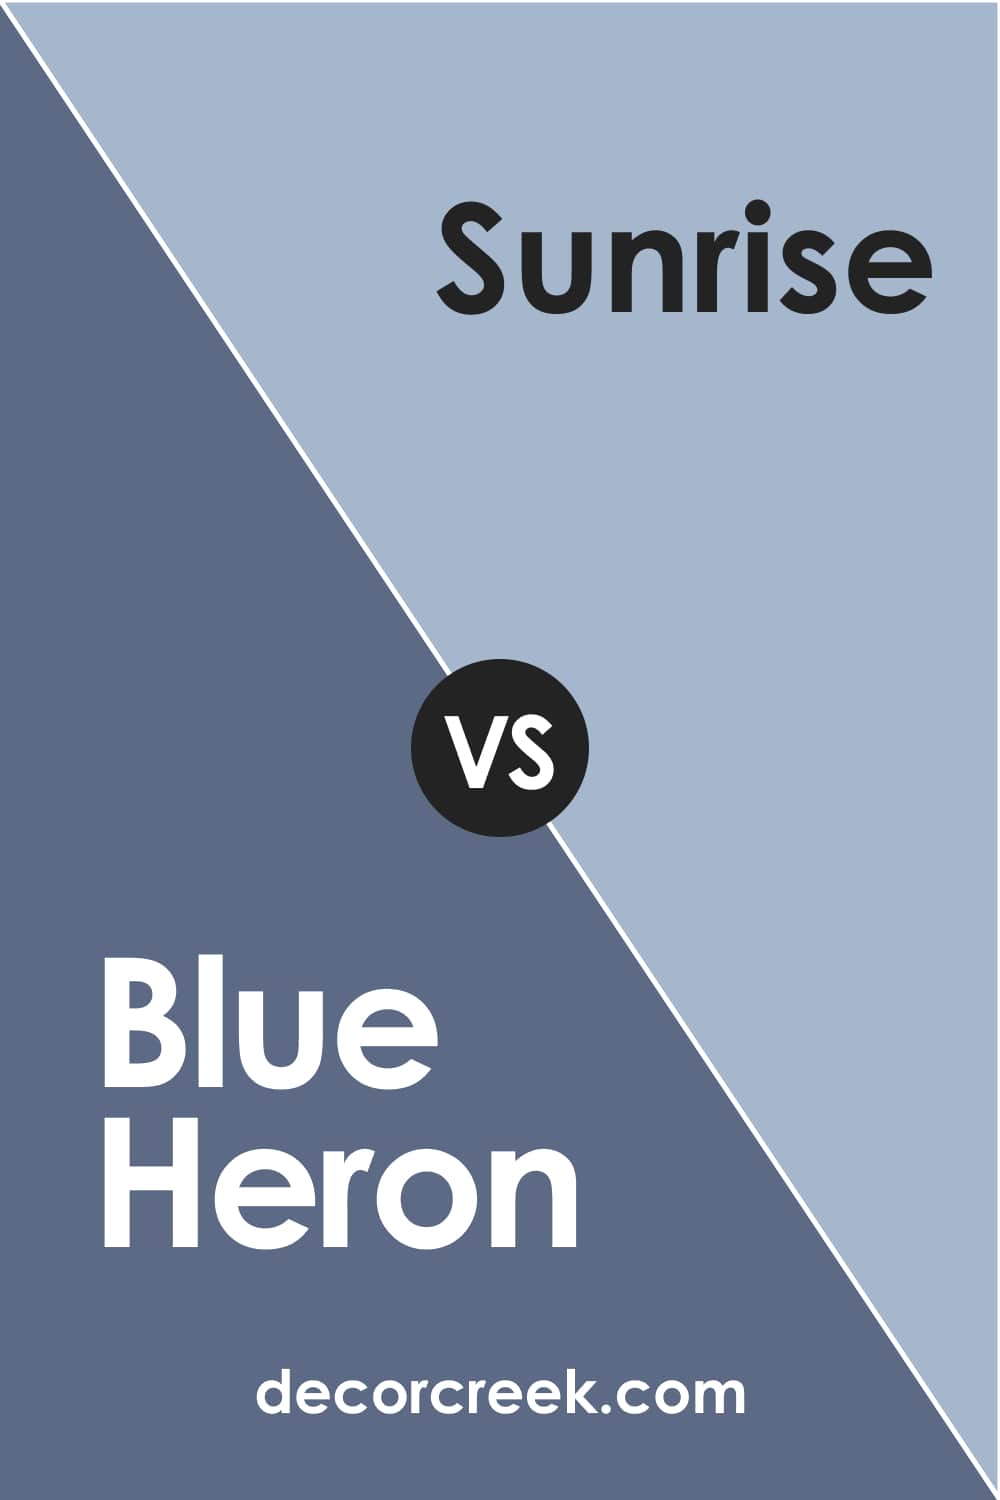 Blue Heron vs Sunrise